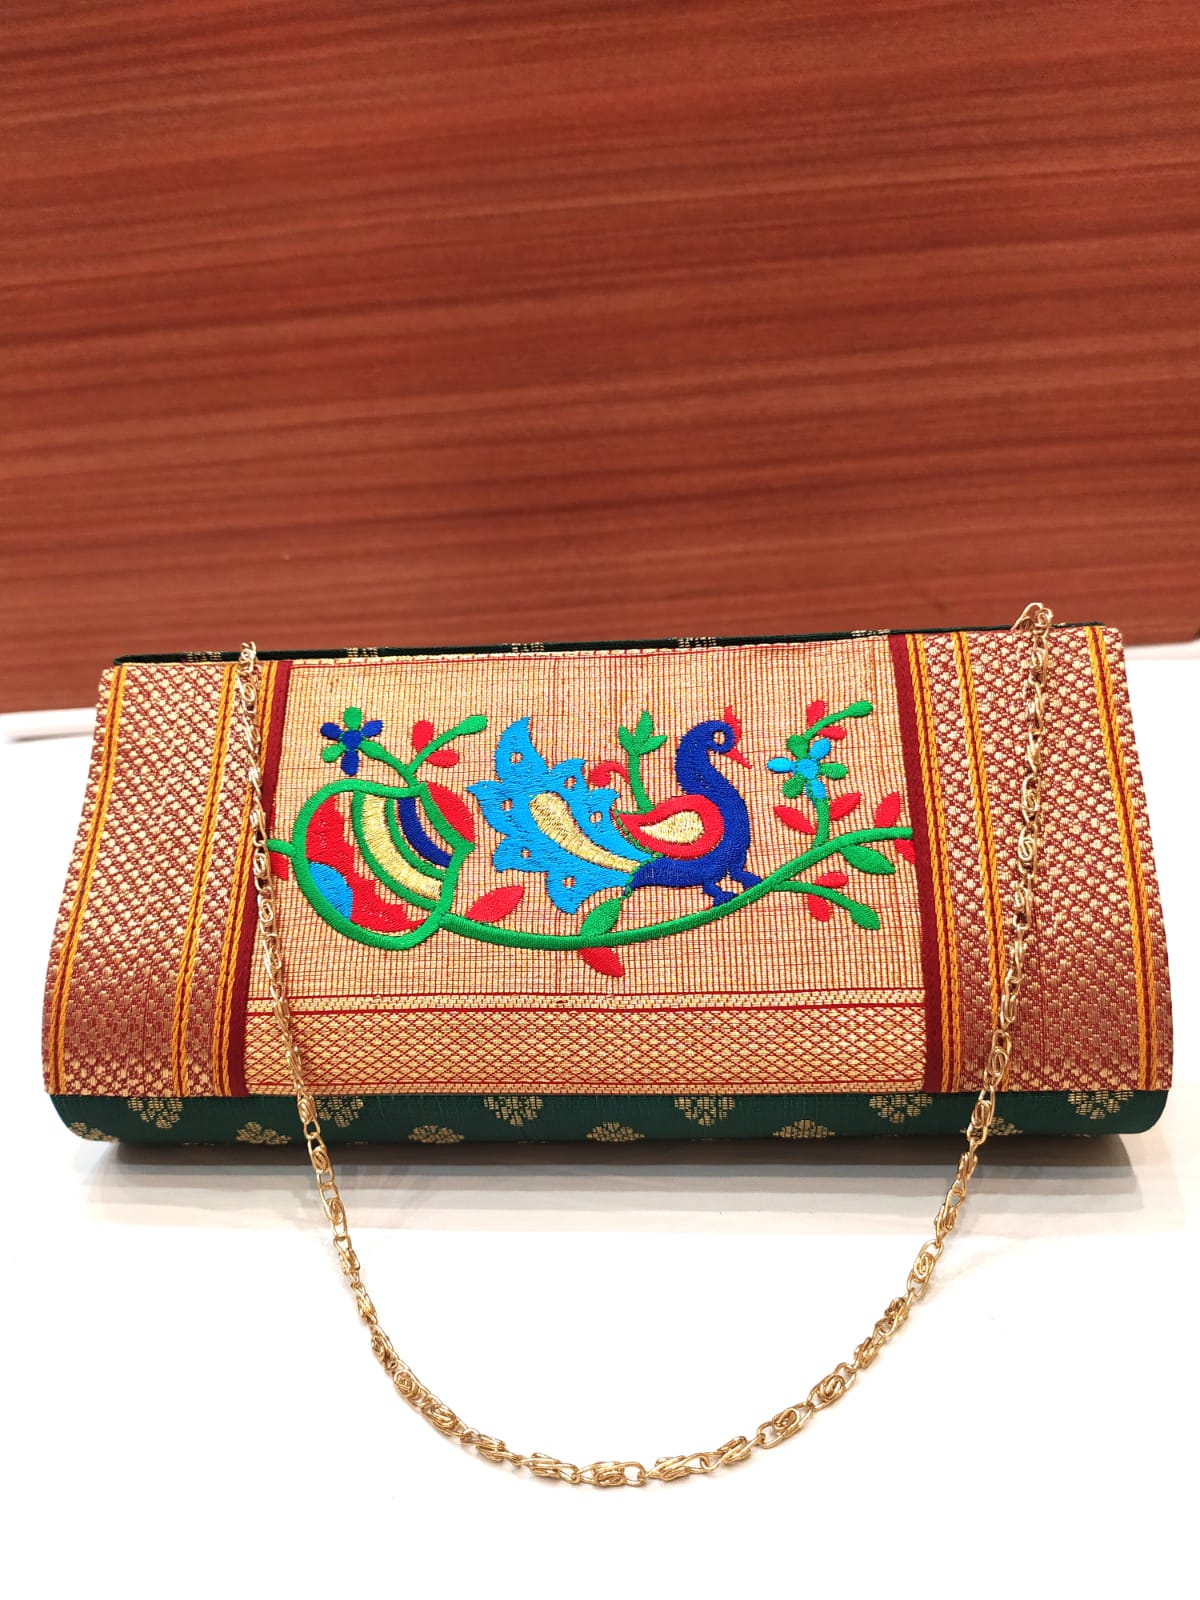 ladies purse | purse ka design | pers ke design | pers ki design | purse  design | ladies handbag - YouTube